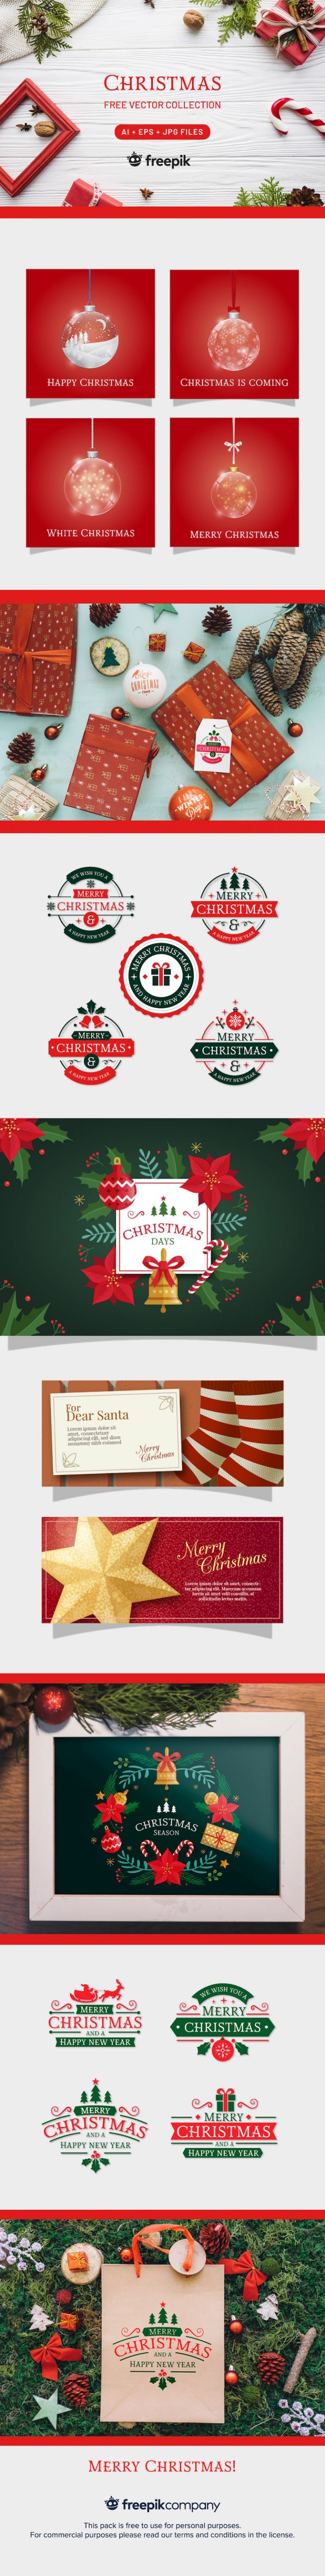 Free Christmas Graphics - Backgrounds, Badges & Ornaments - Super Dev ...